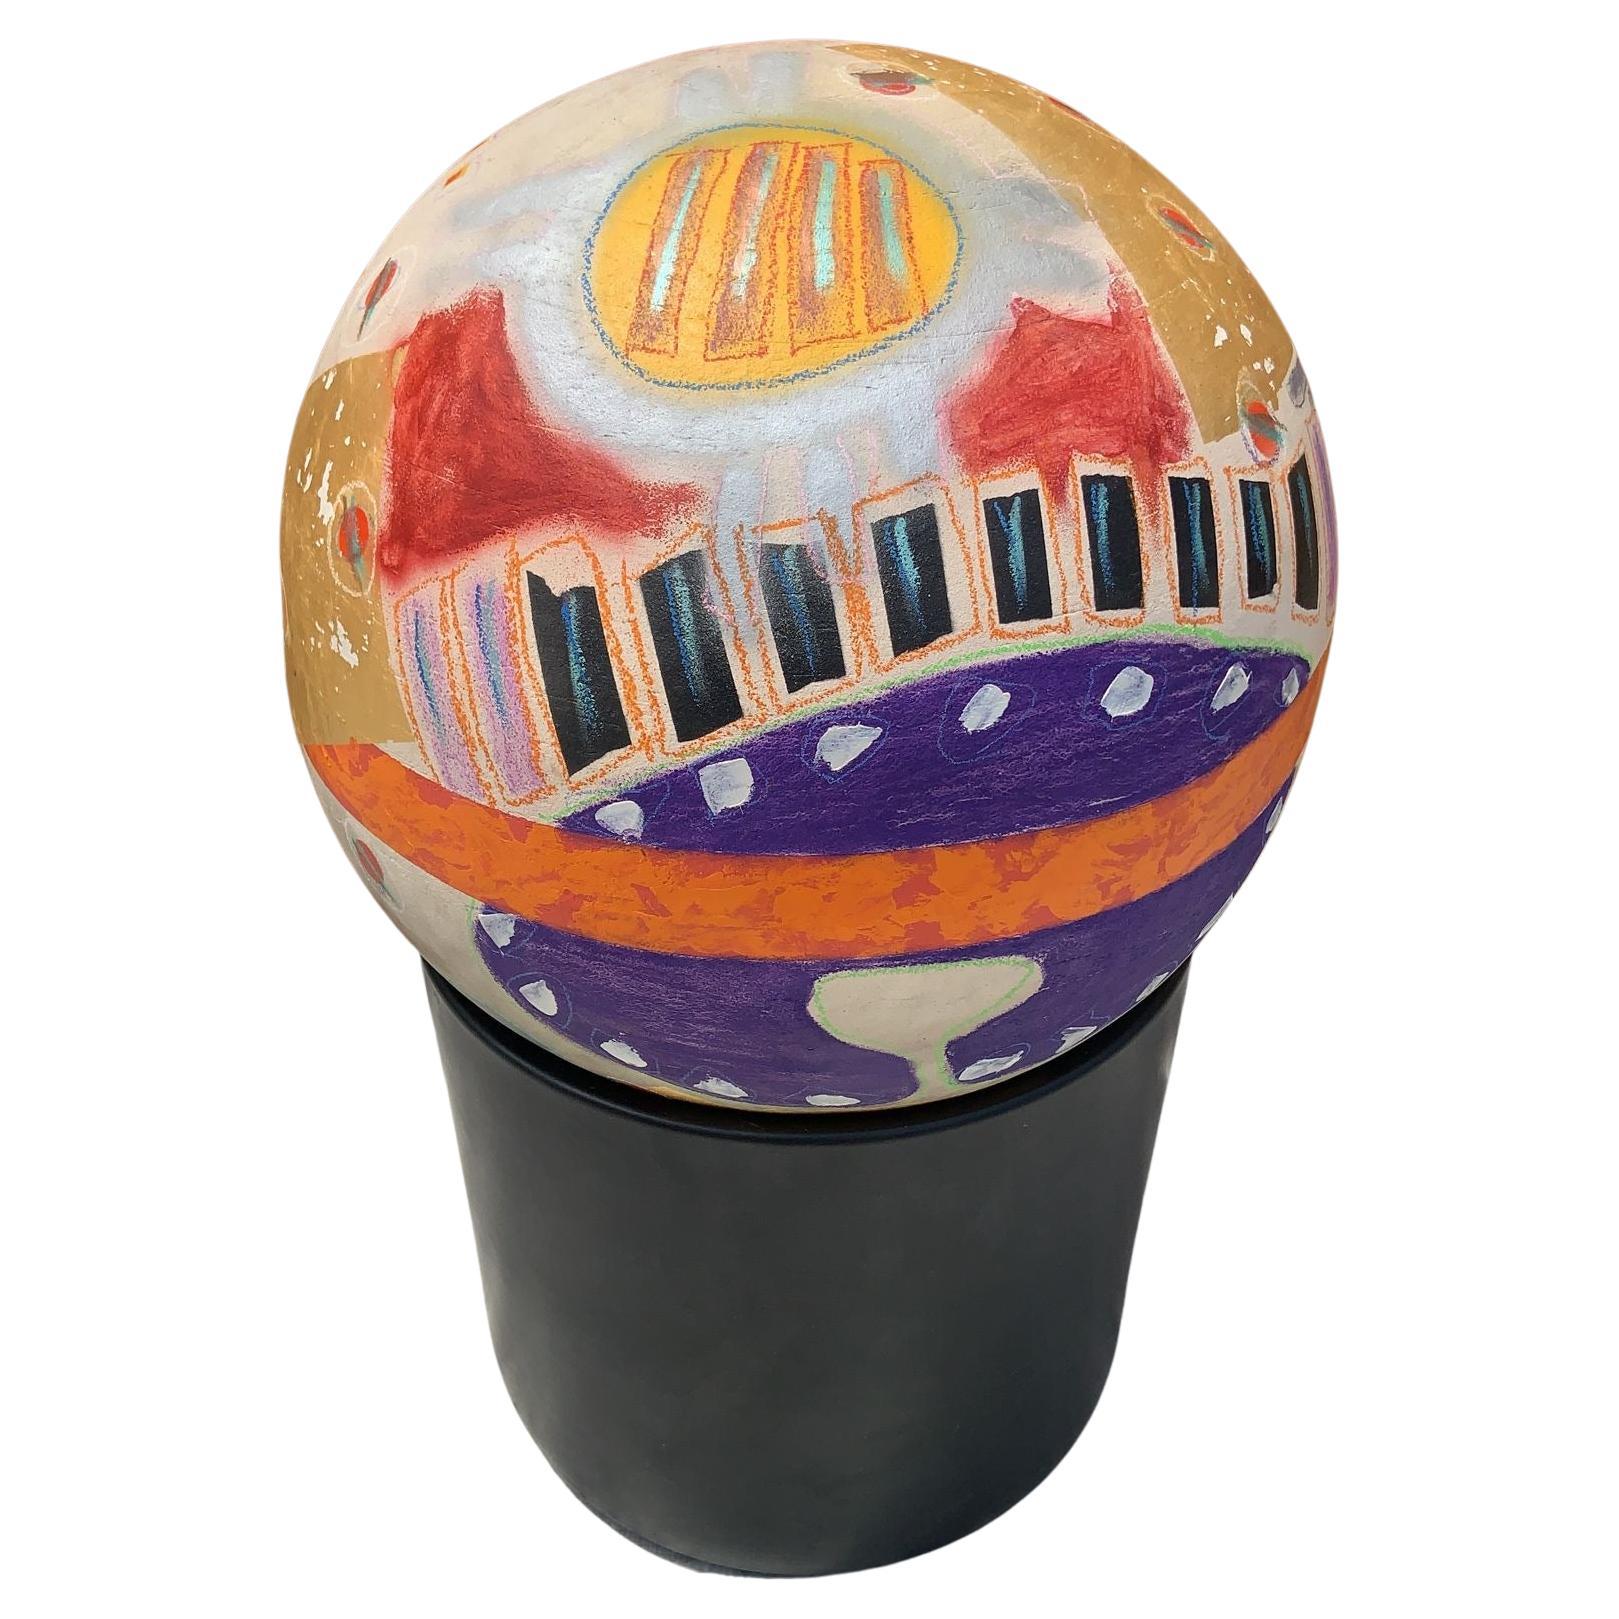 Multi Color Ball Sculpture on a Gainey Ceramics Black Clay Planter - 2 Piece Set For Sale